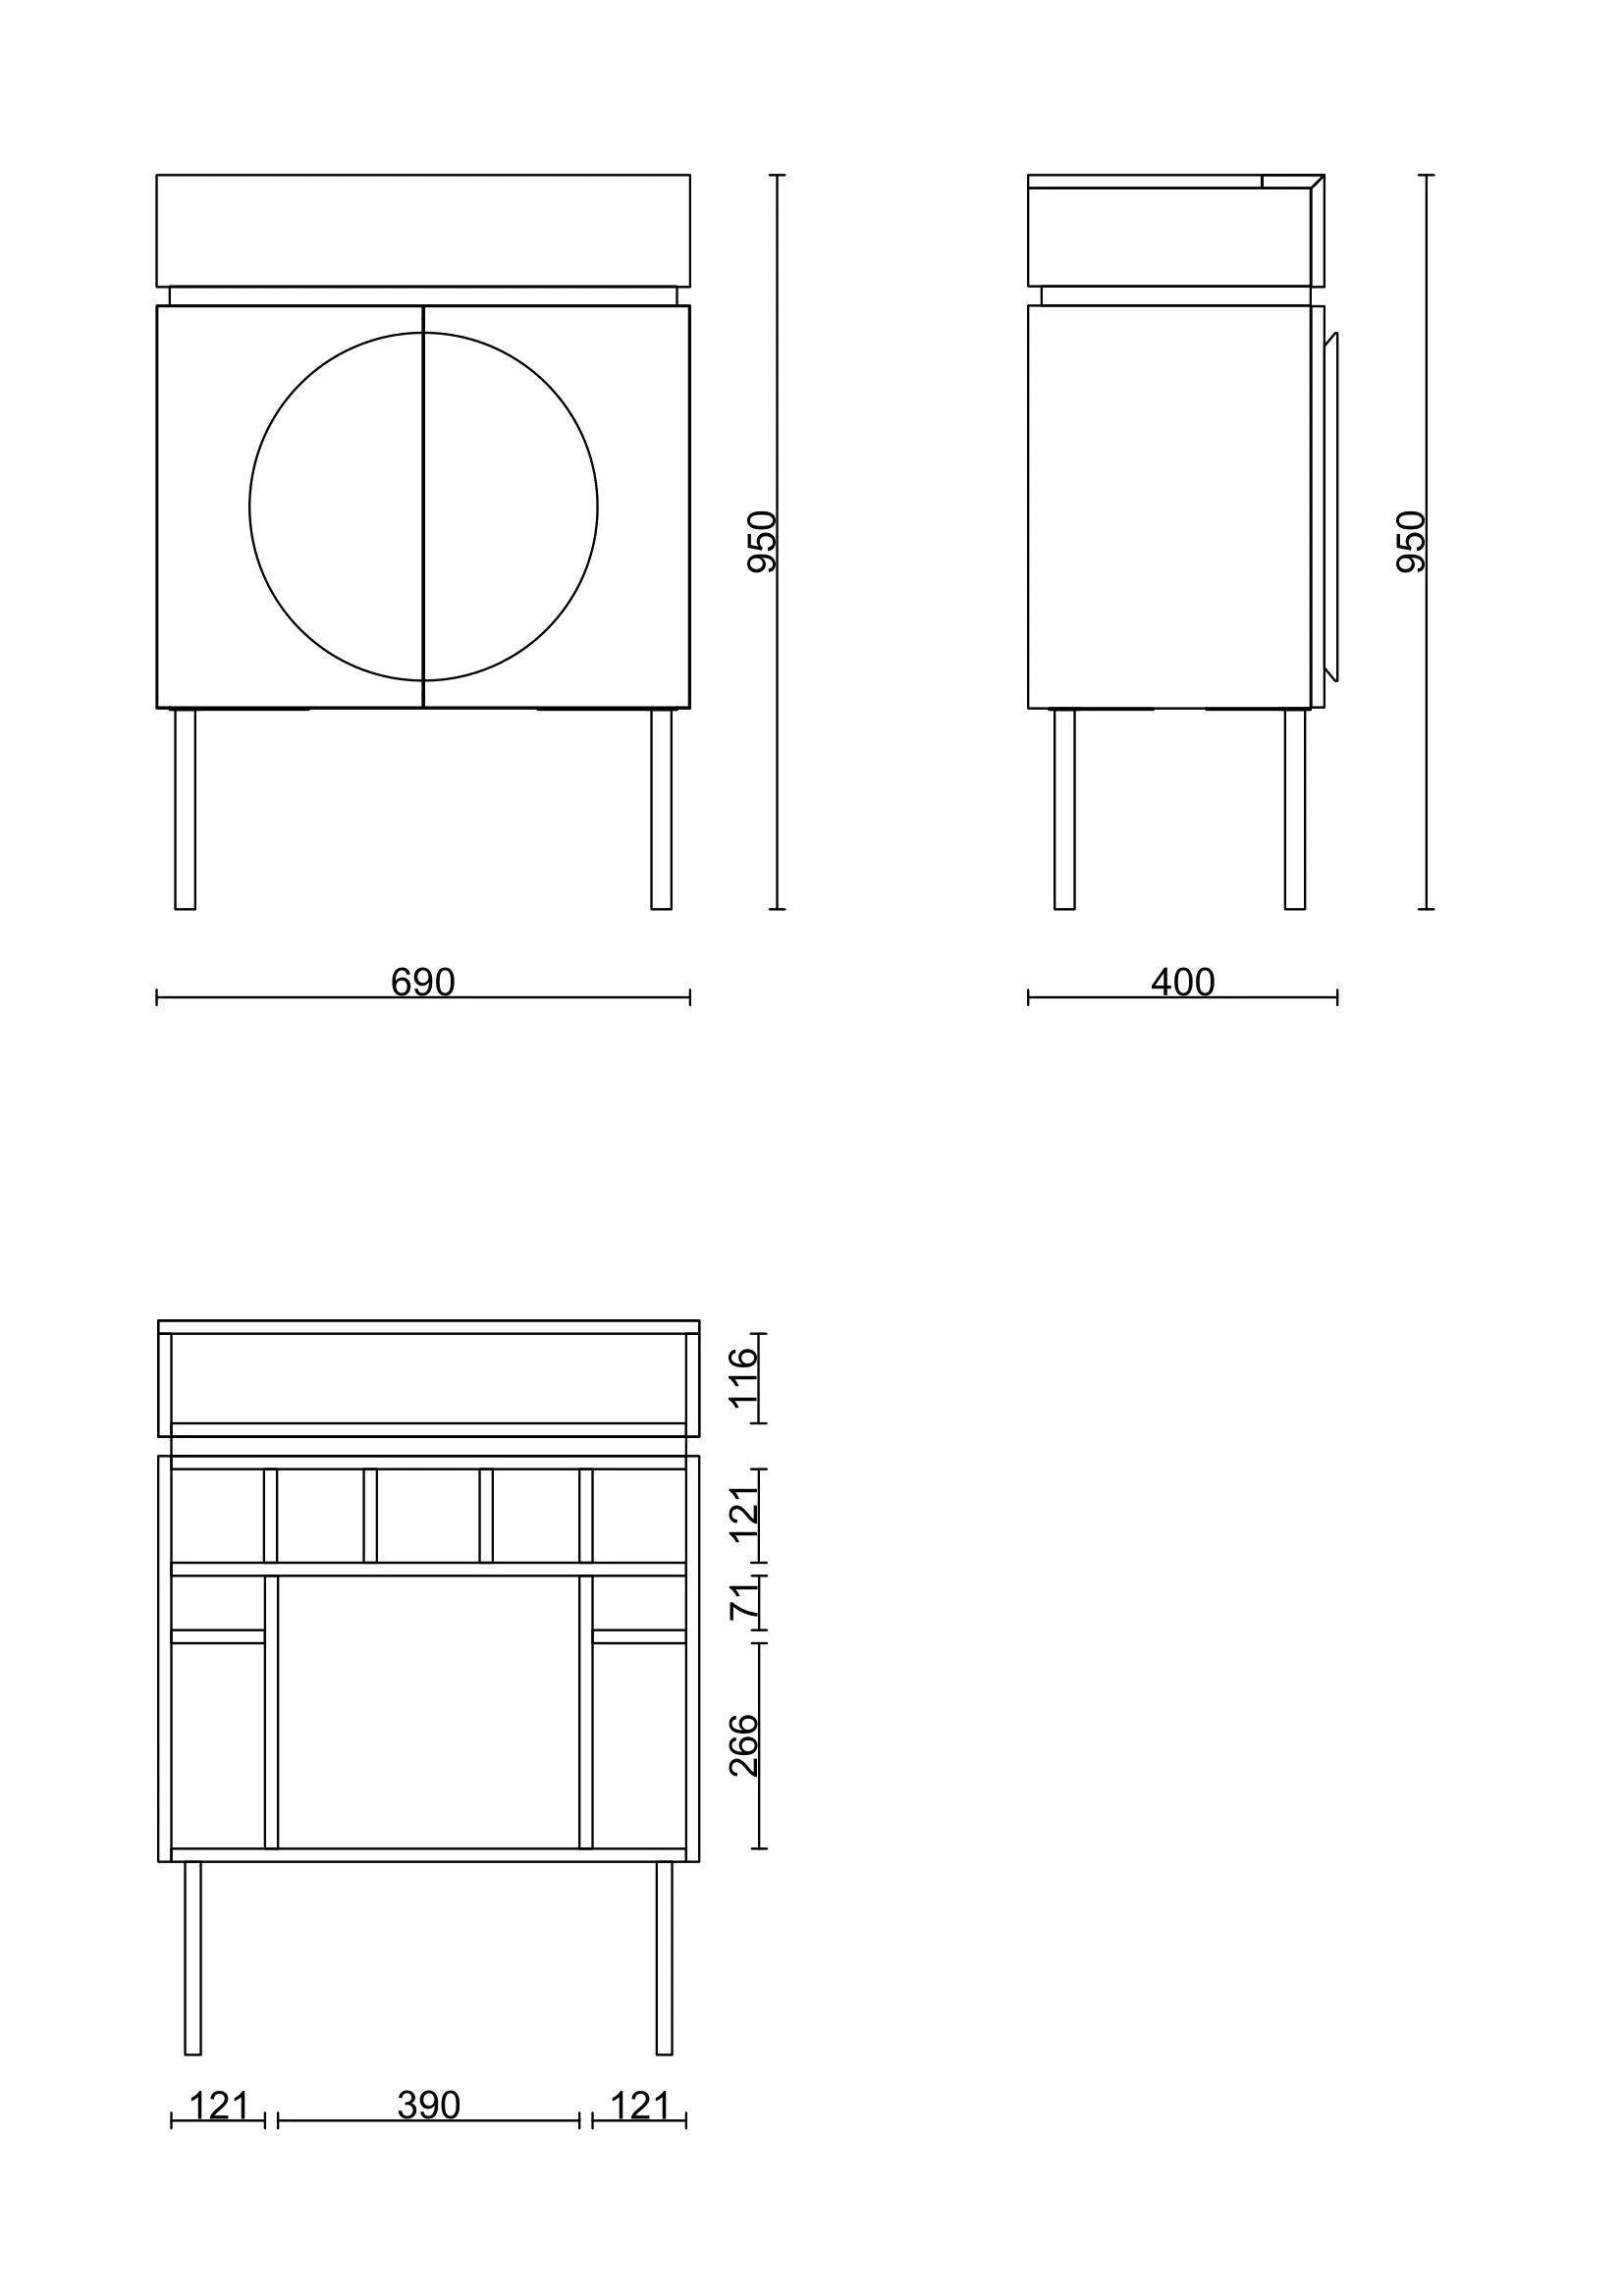 Gianni - Rinocca (rinocca gianni bar cabinet blueprint)